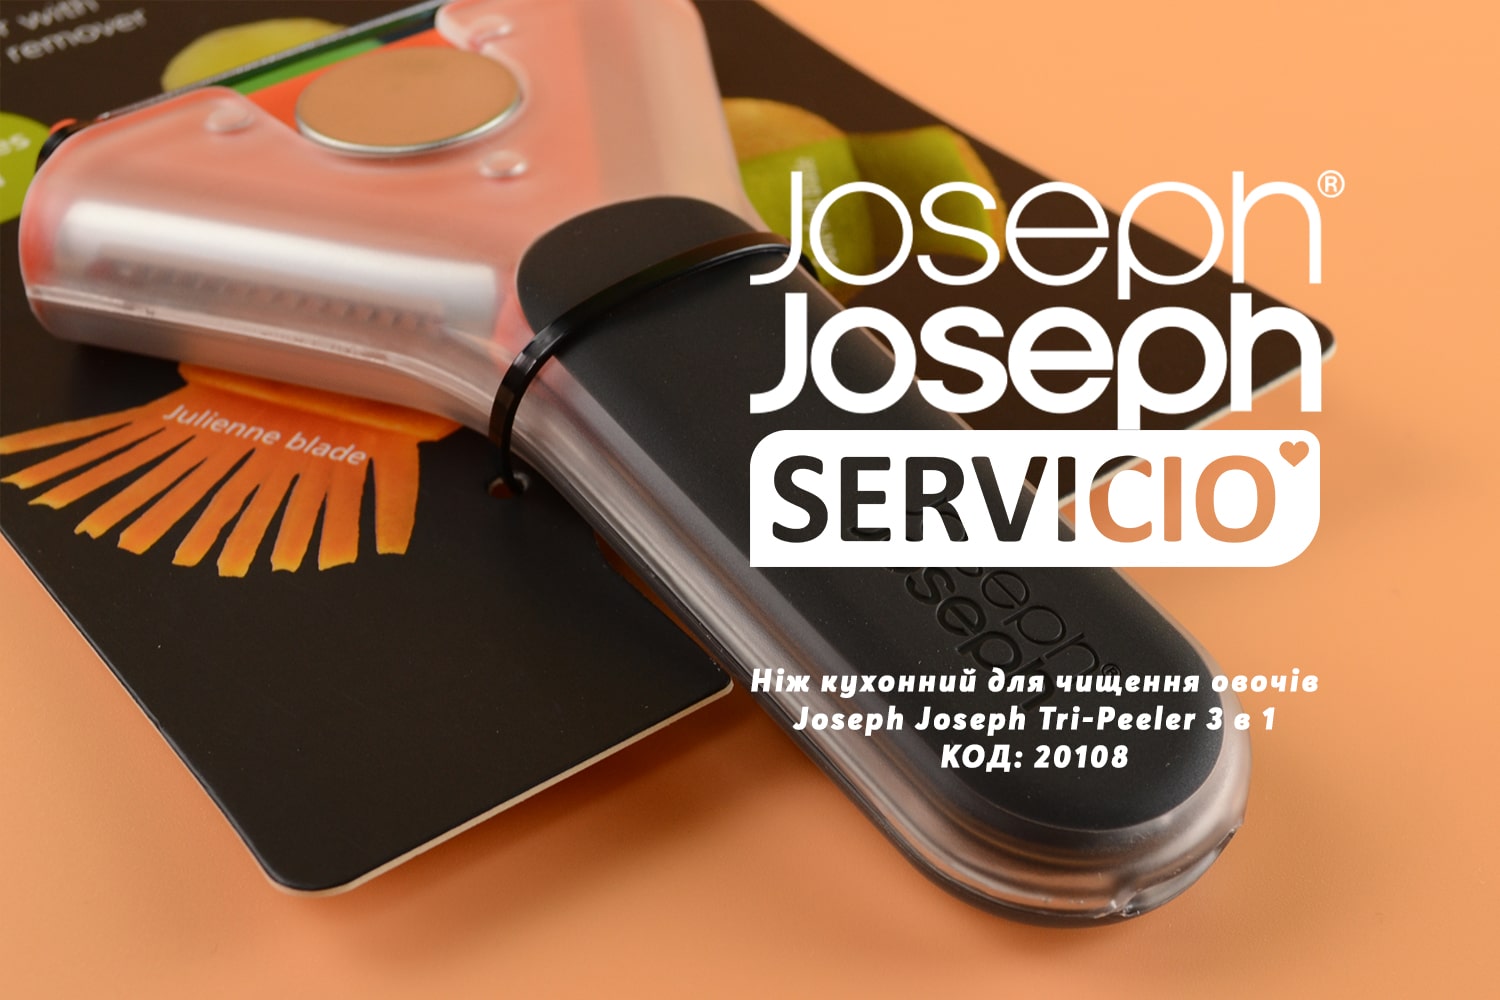 Joseph Joseph 20108